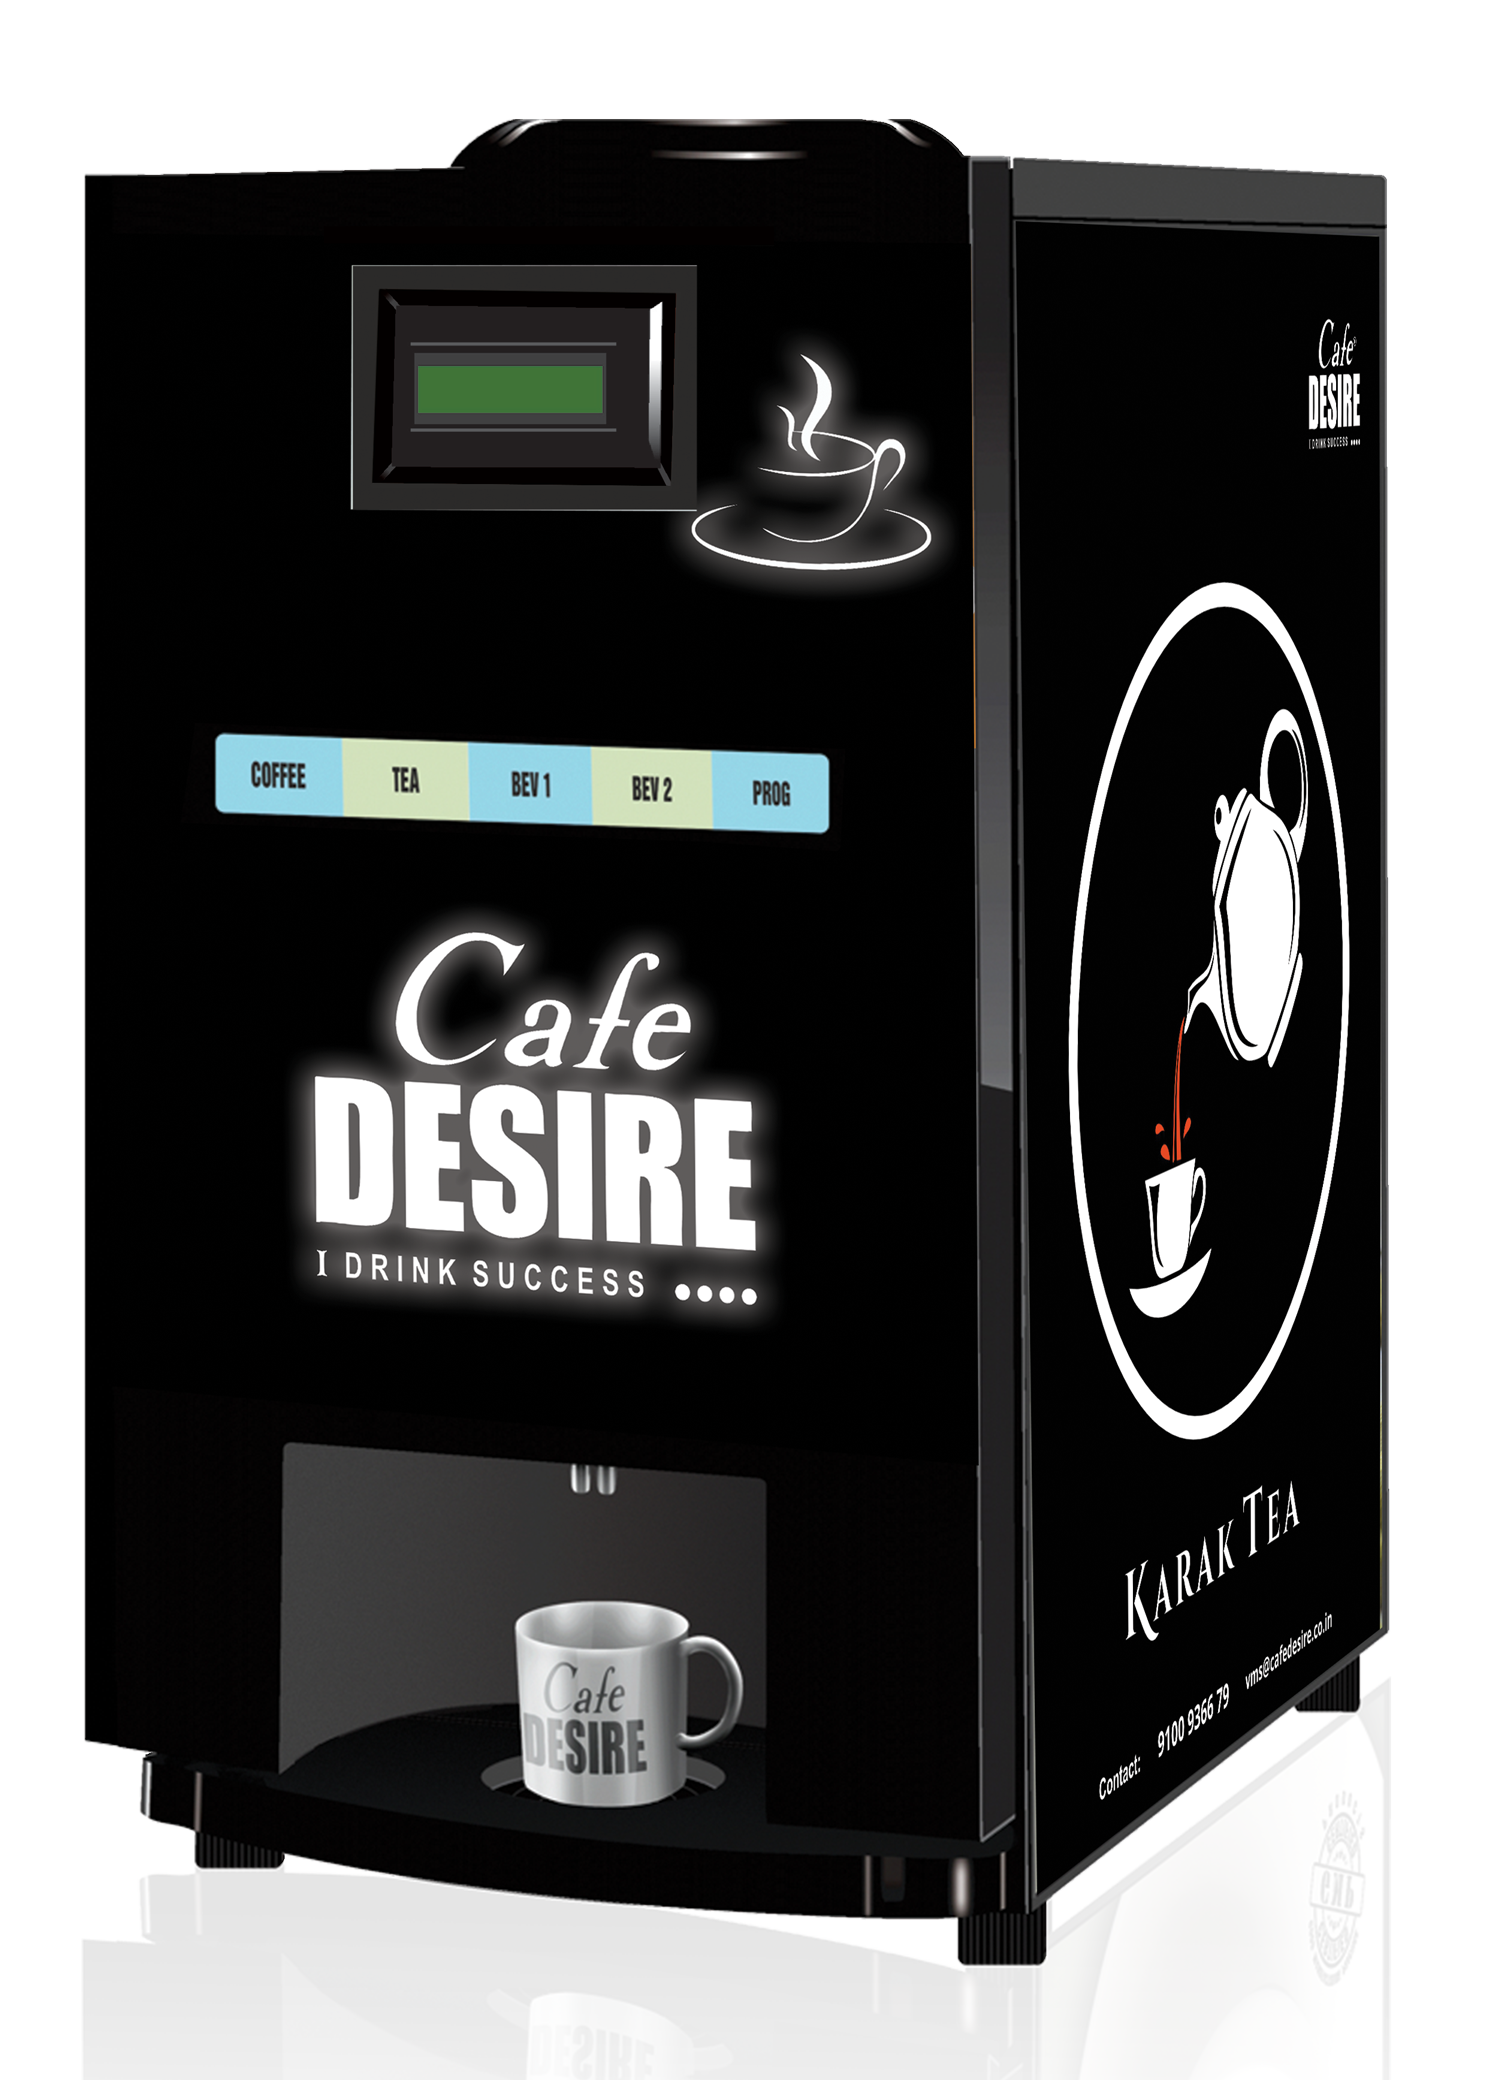 LED Coffee Machine 4 Lane, Four Beverage Options